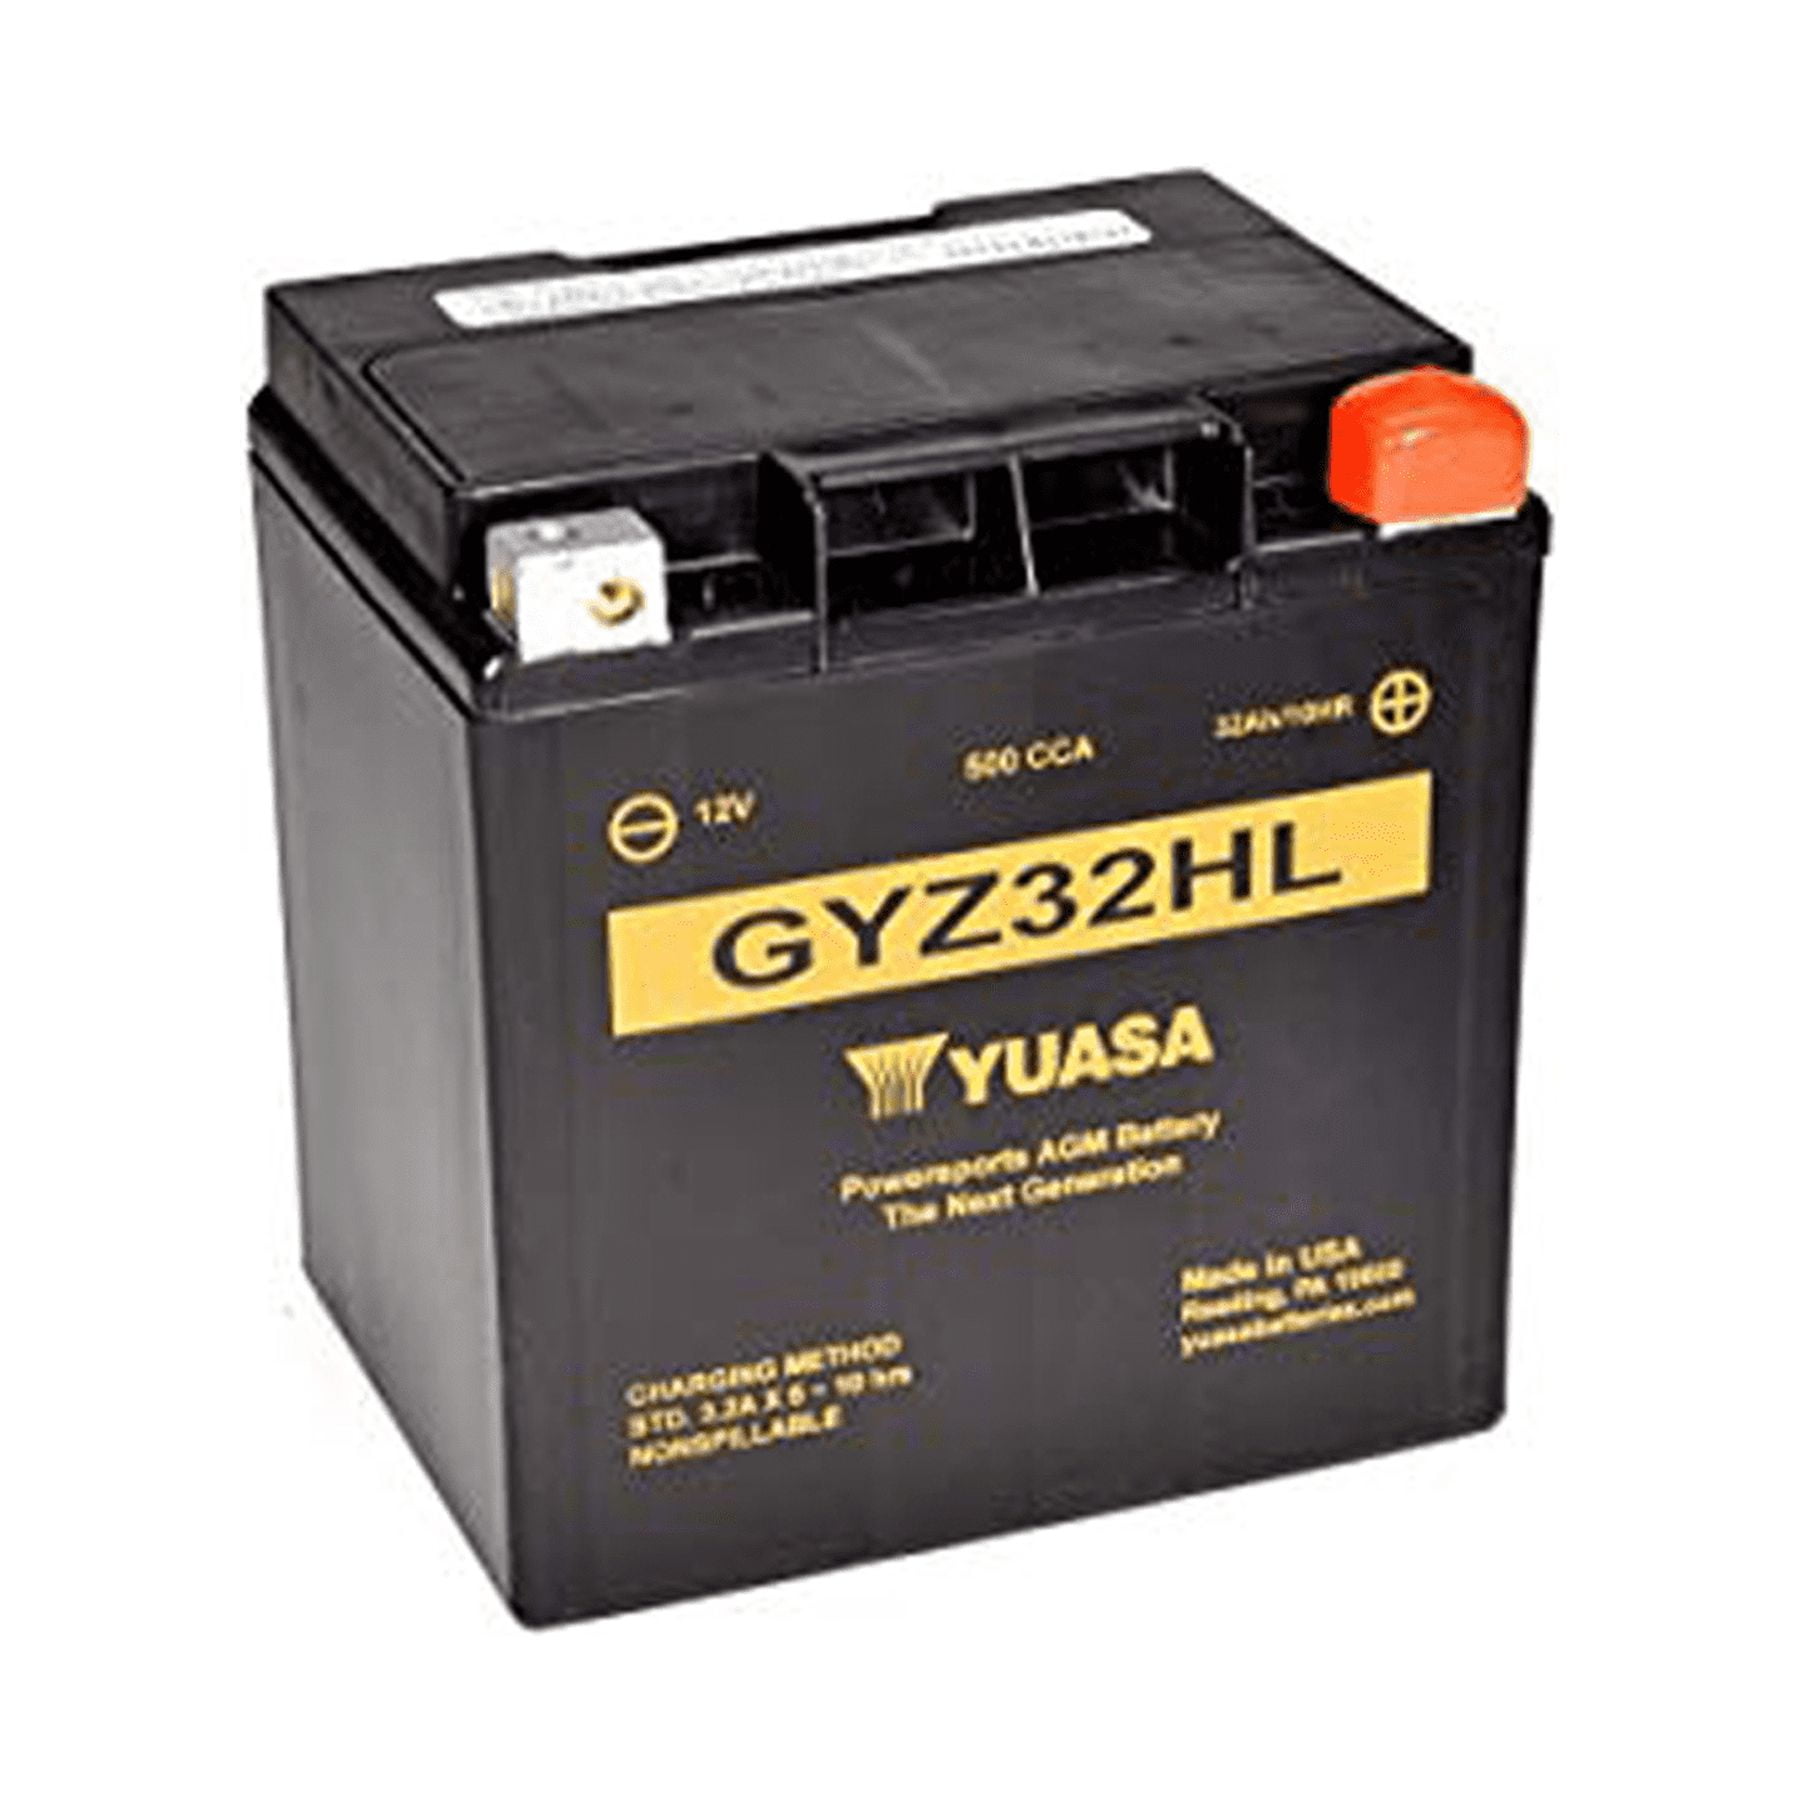 Yuasa Gyz32hl Factory Activated, Maintenance Free